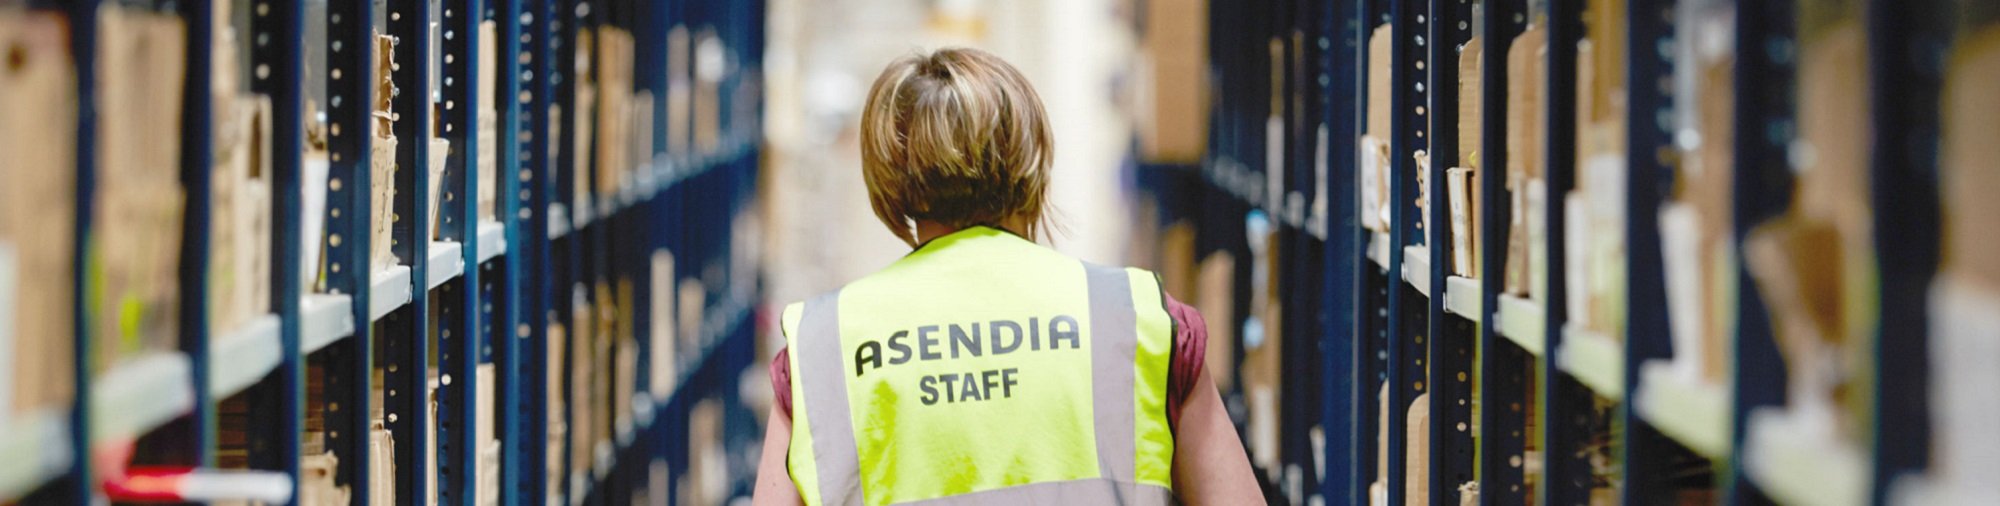 Asendia Careers header